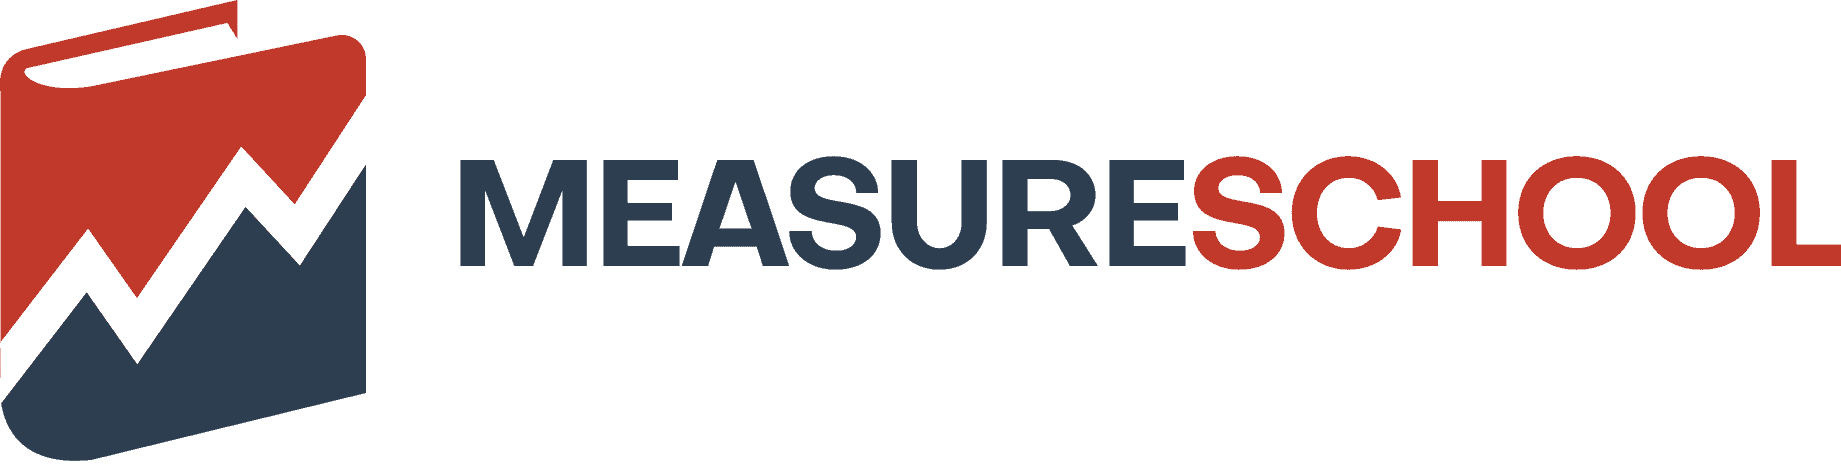 MeasureSchool logo